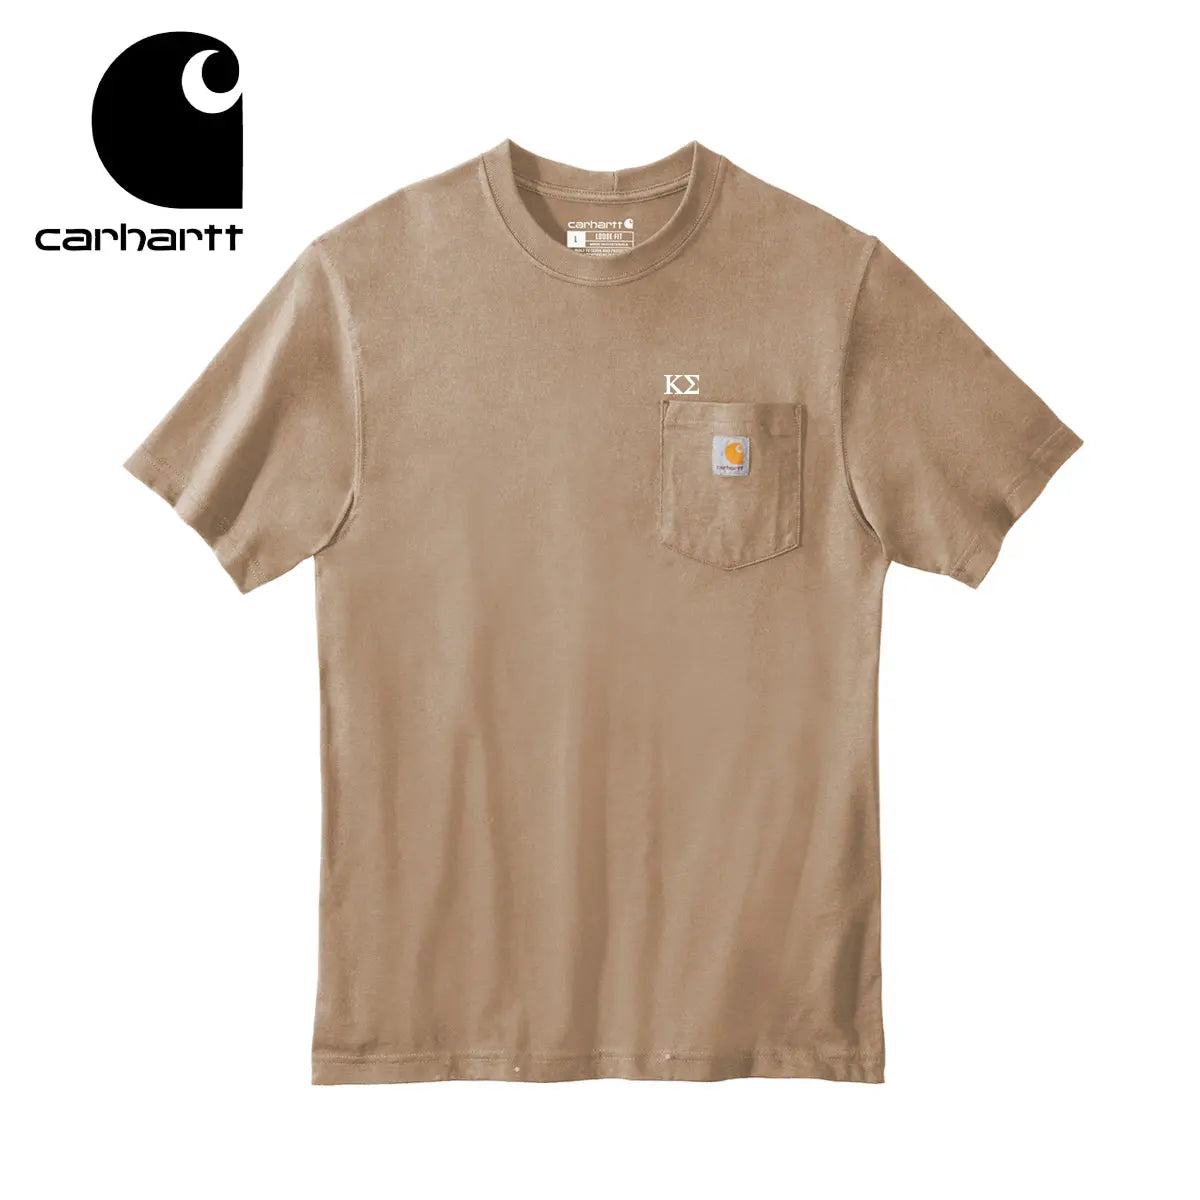 Kappa Sig Carhartt Relaxed Fit Short Sleeve Pocket Tee - Kappa Sigma Official Store